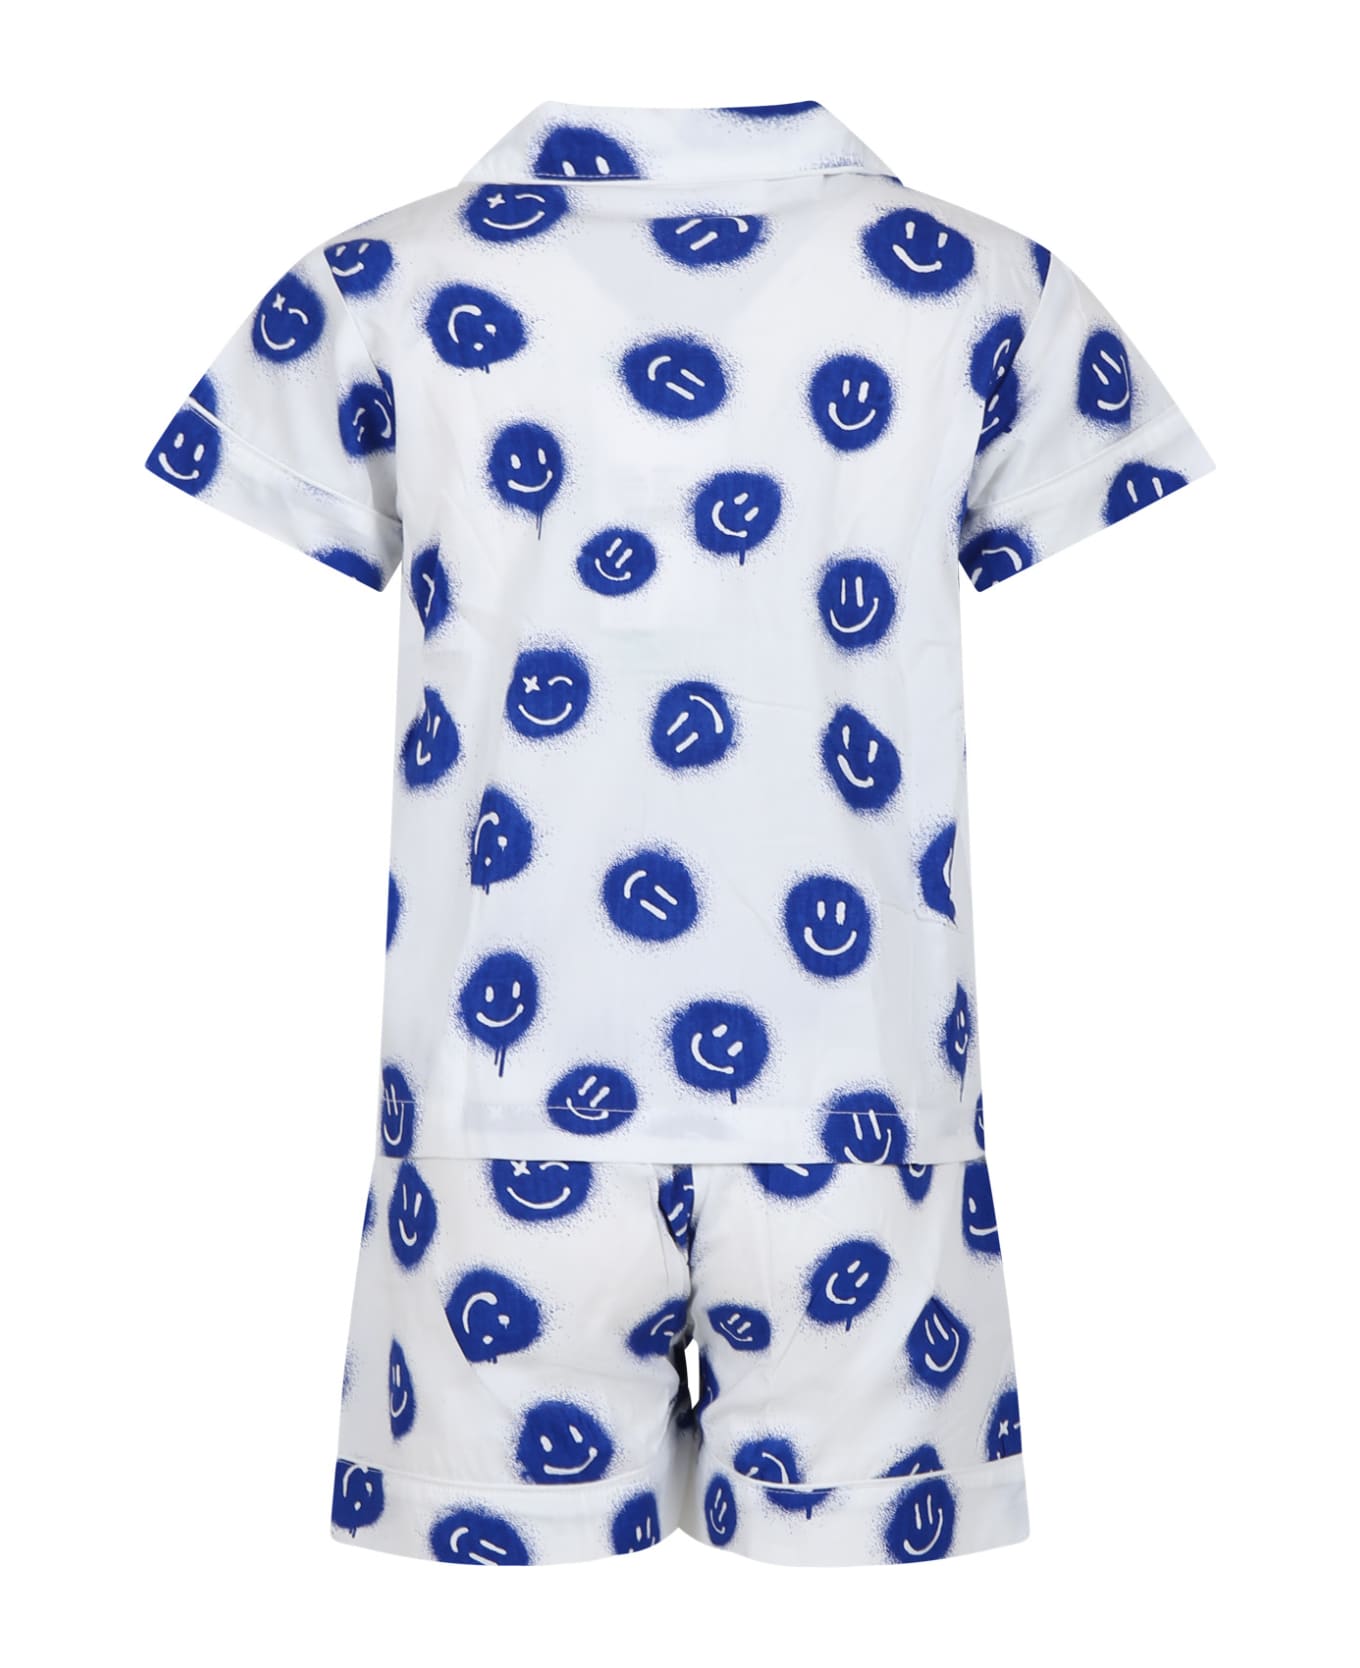 Molo White Pajamas For Kids With Smiley - Blue